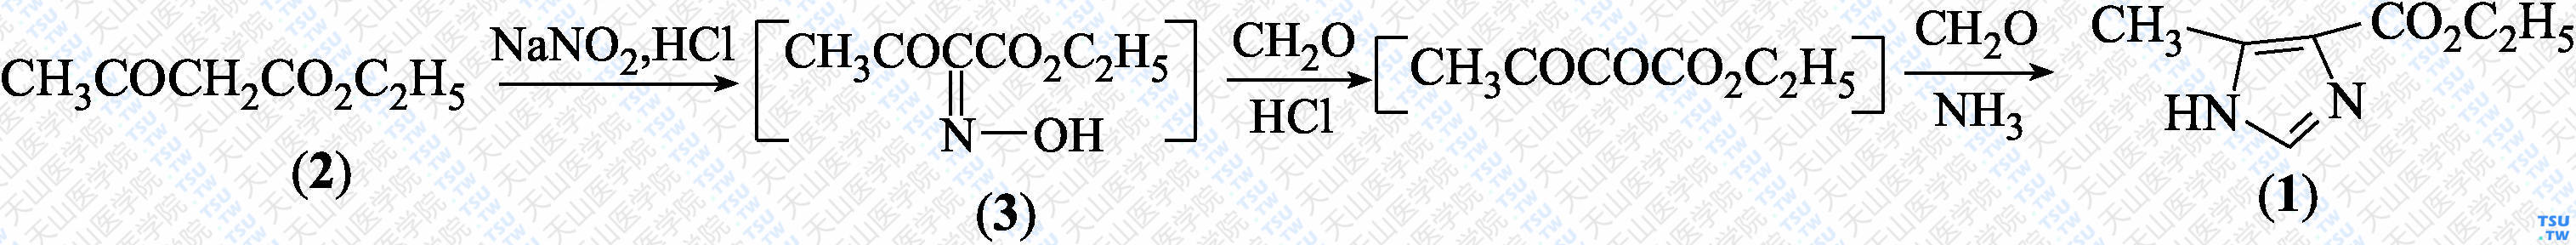 5-甲基-4-咪唑甲酸乙酯（分子式：C<sub>7</sub>H<sub>10</sub>N<sub>2</sub>O<sub>2</sub>）的合成方法路线及其结构式